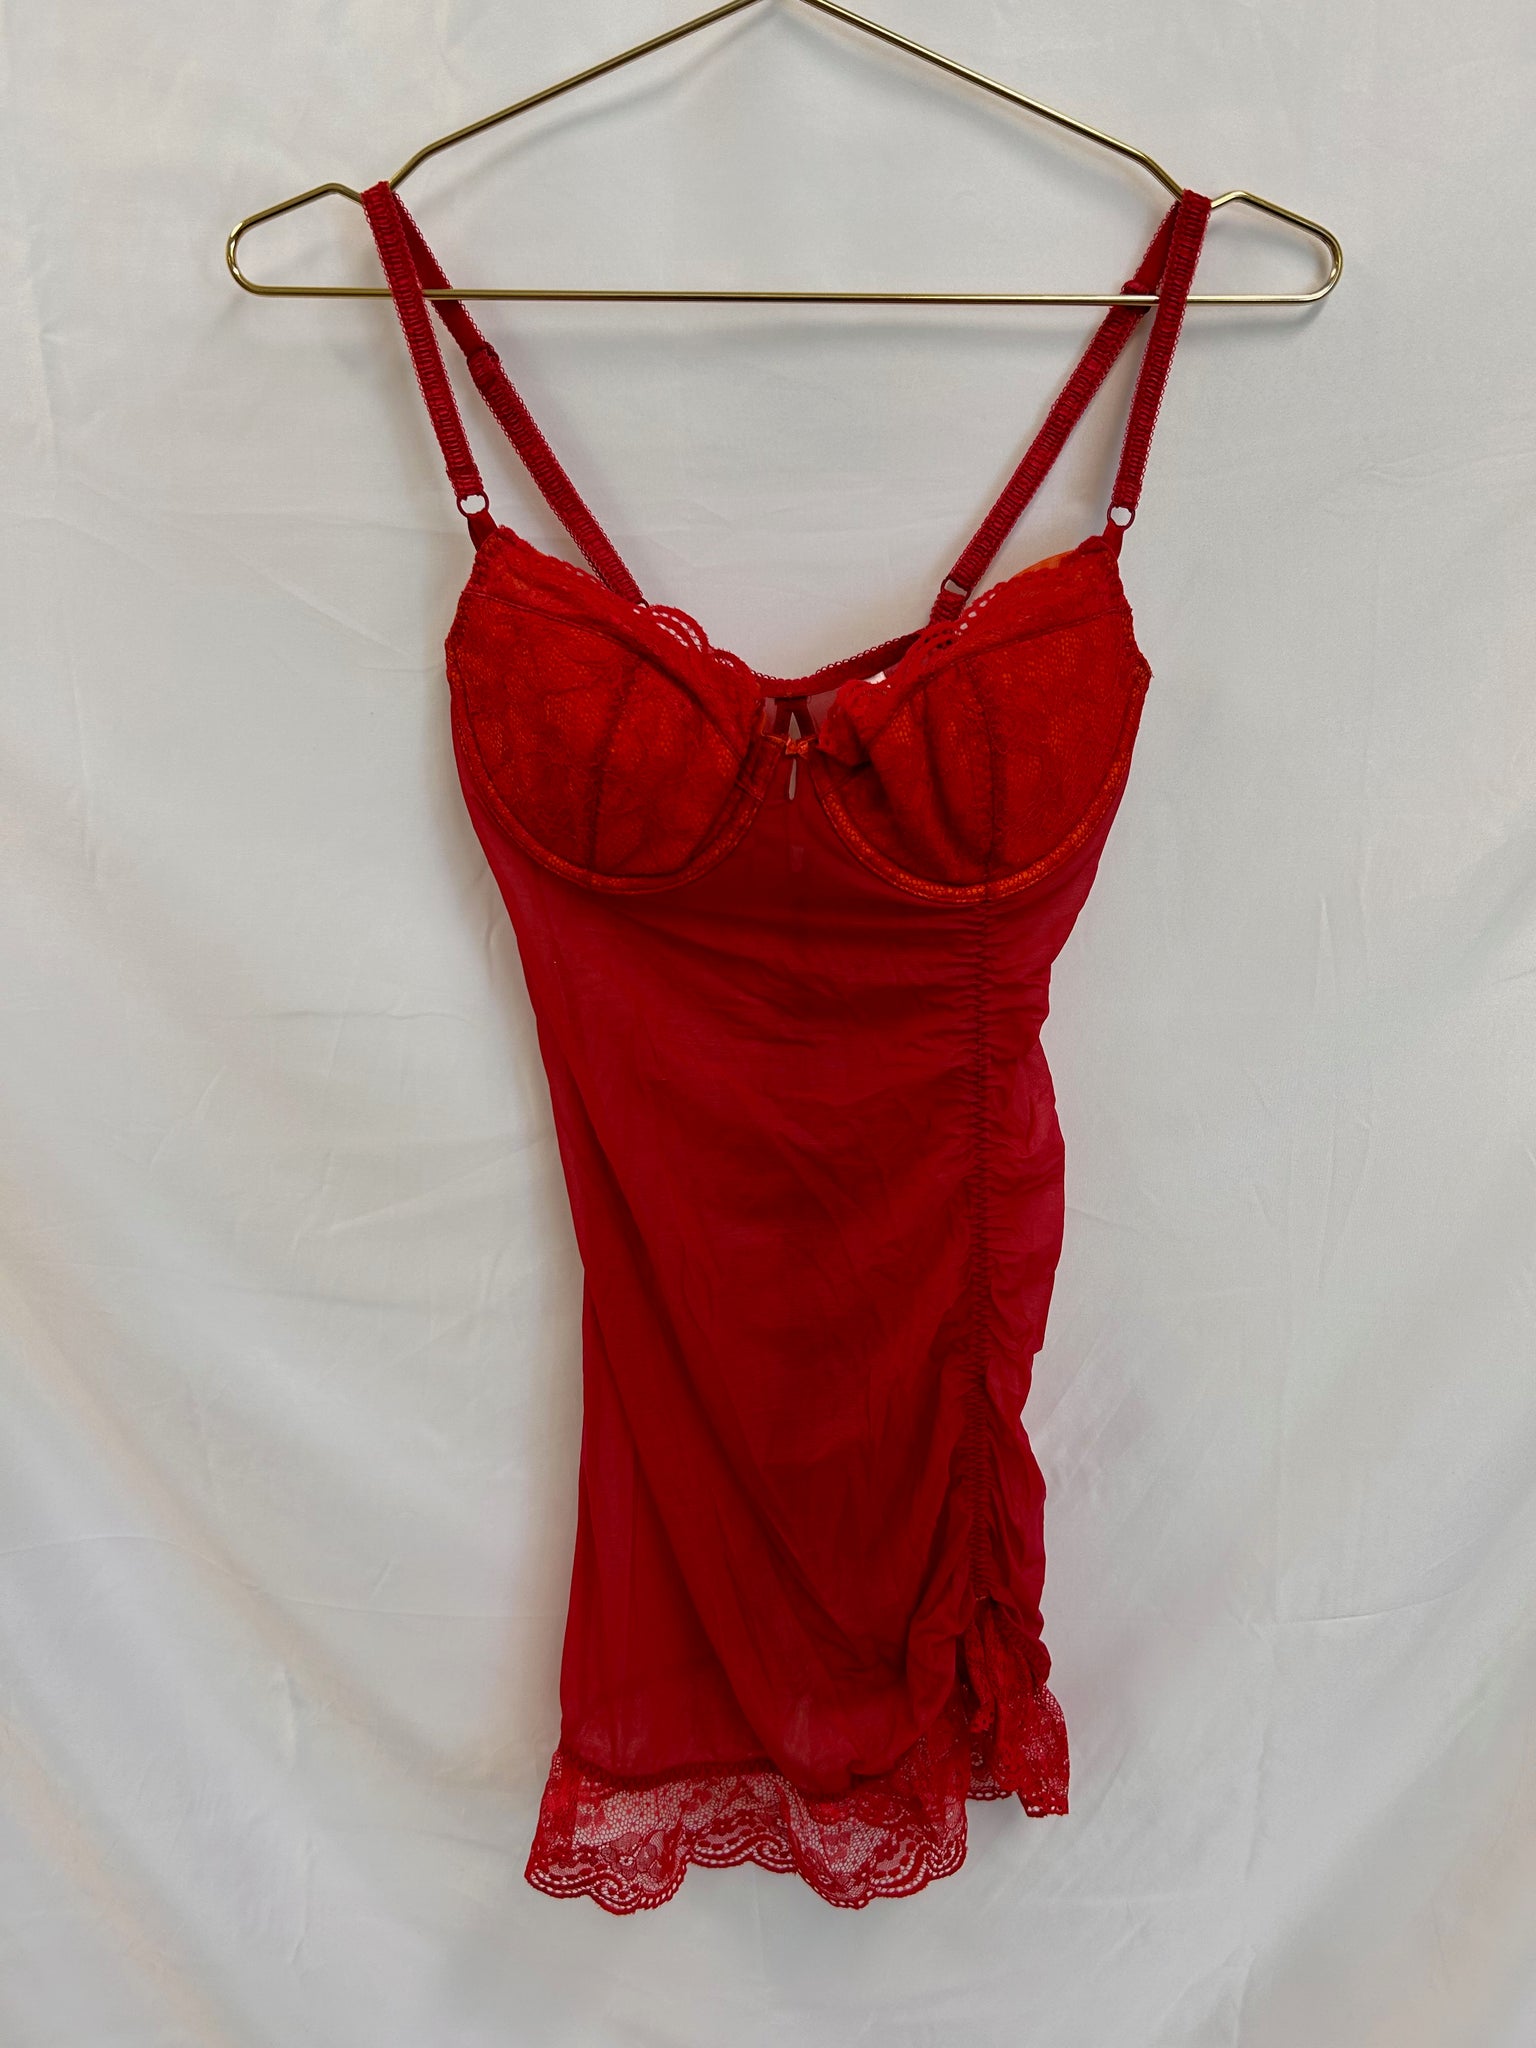 VINTAGE: Victoria’s Secret Hot Red Top/Mini Dress